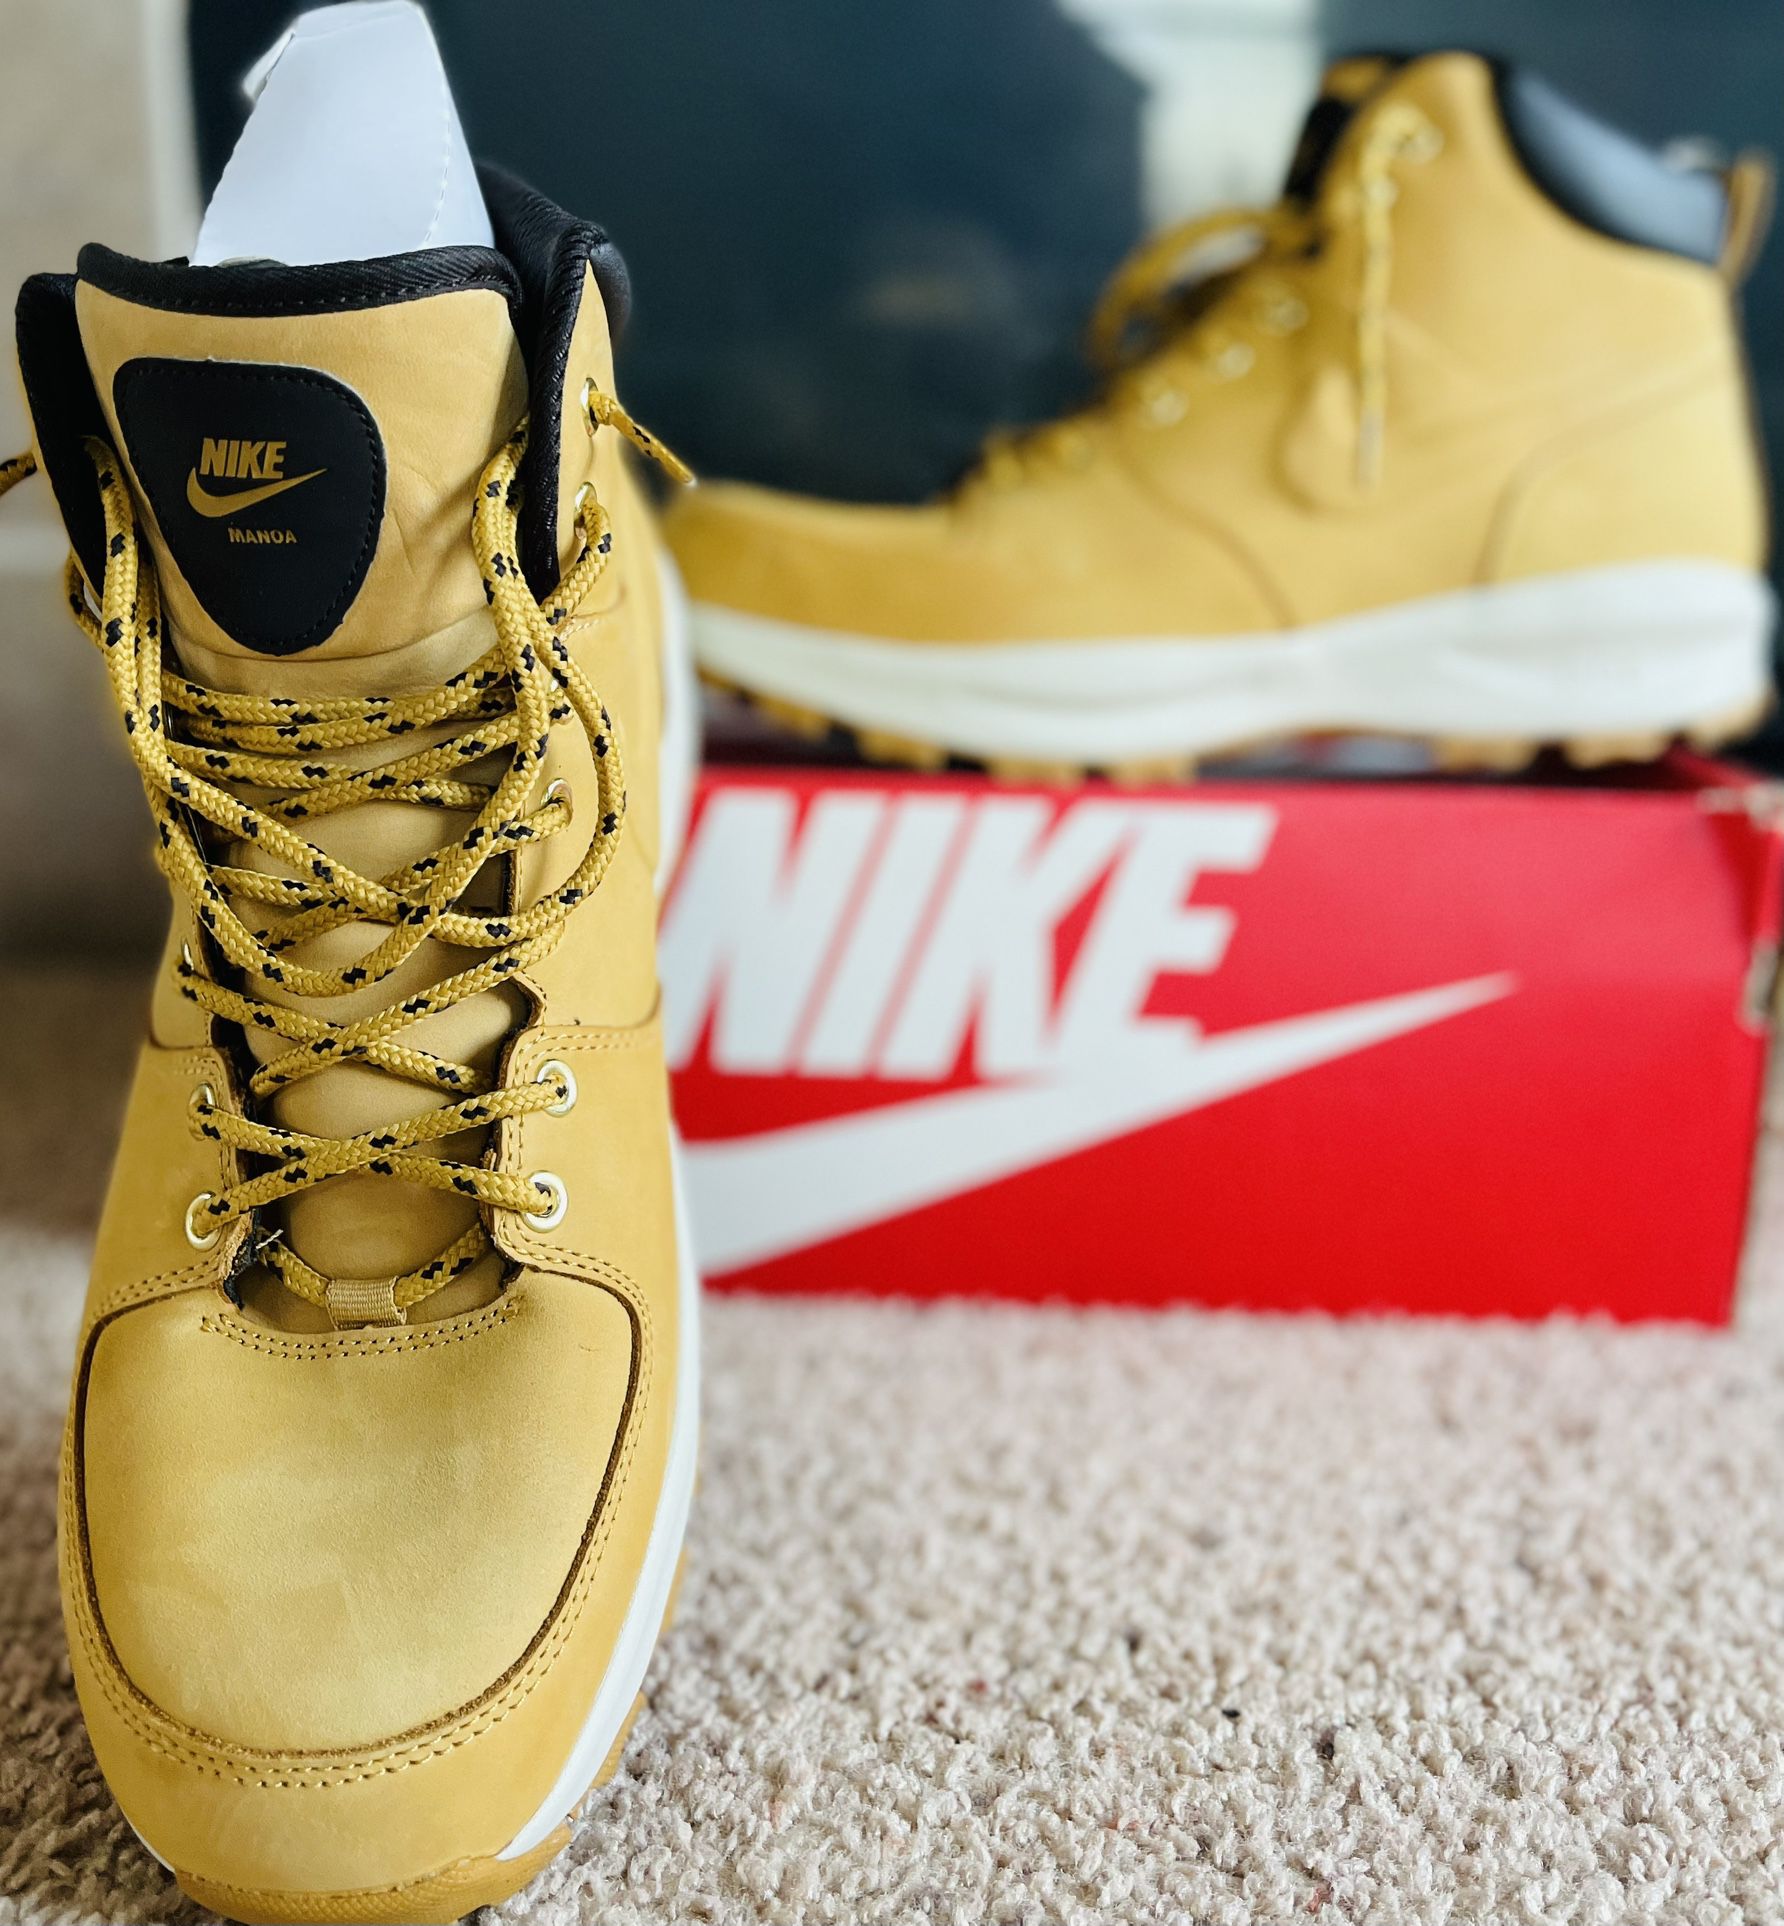 Nike Men’s Boots